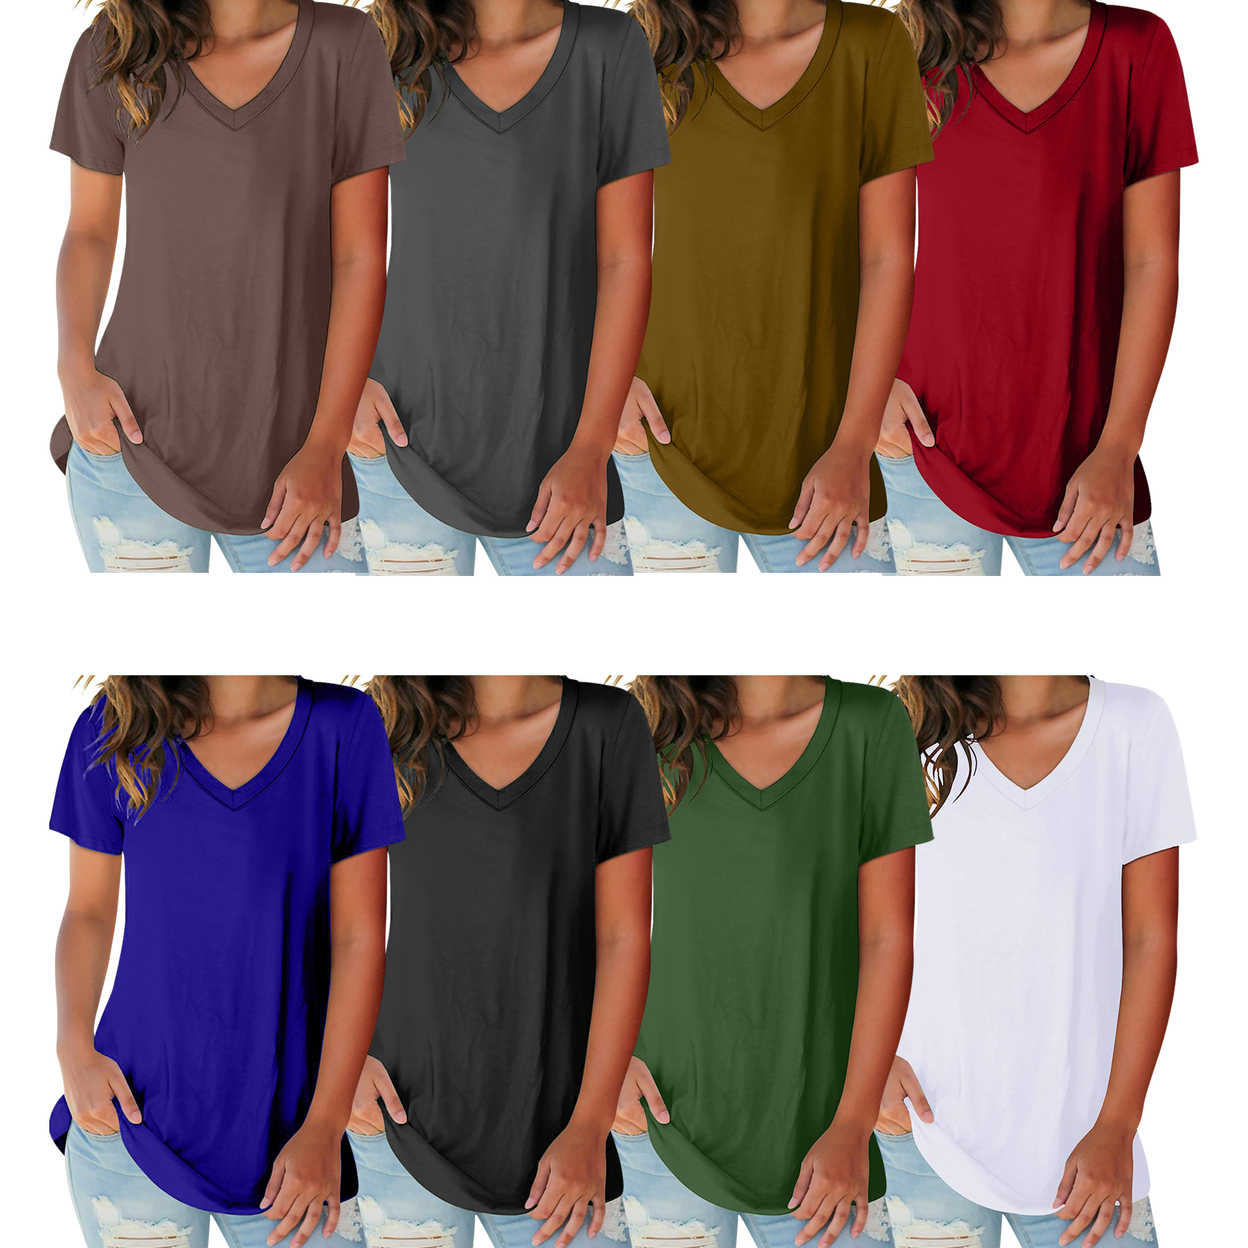 2-Pack: Women's Ultra Soft Smooth Cotton Blend Basic V-Neck Short Sleeve Shirts - Grey & Brown, X-large